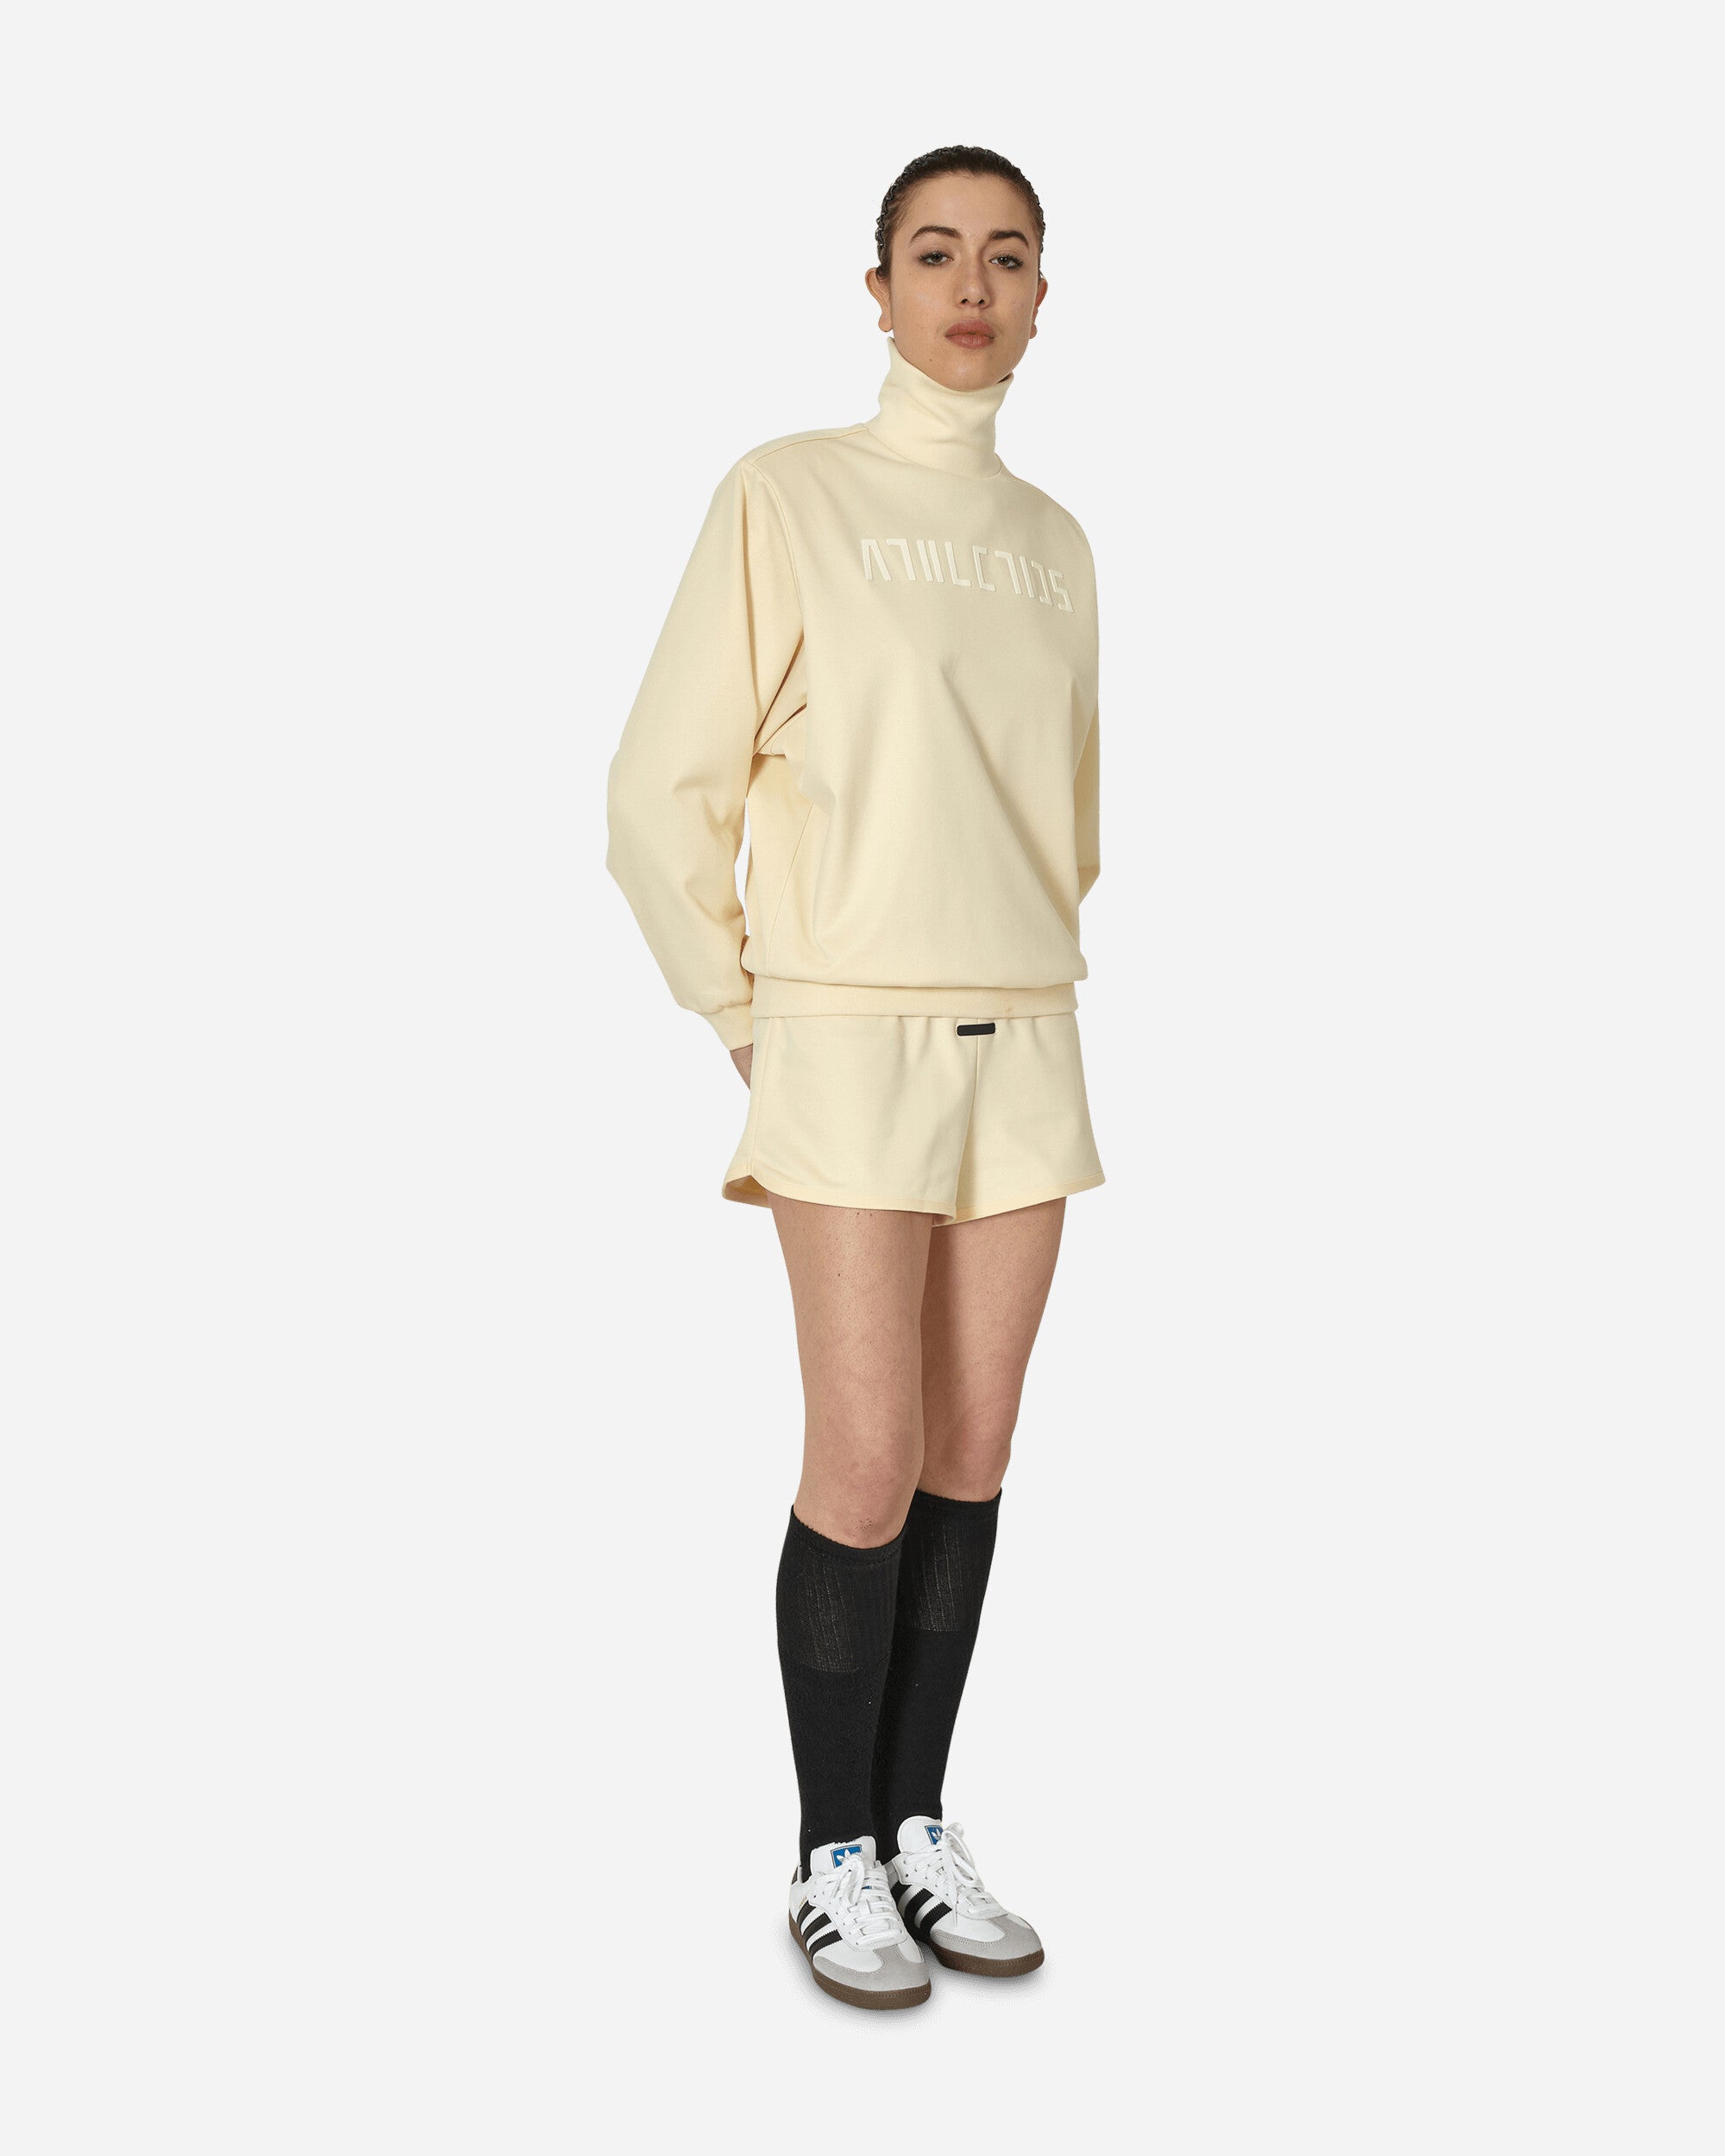 adidas Athletics Mock Pale Yellow Sweatshirts Crewneck IS8714 001